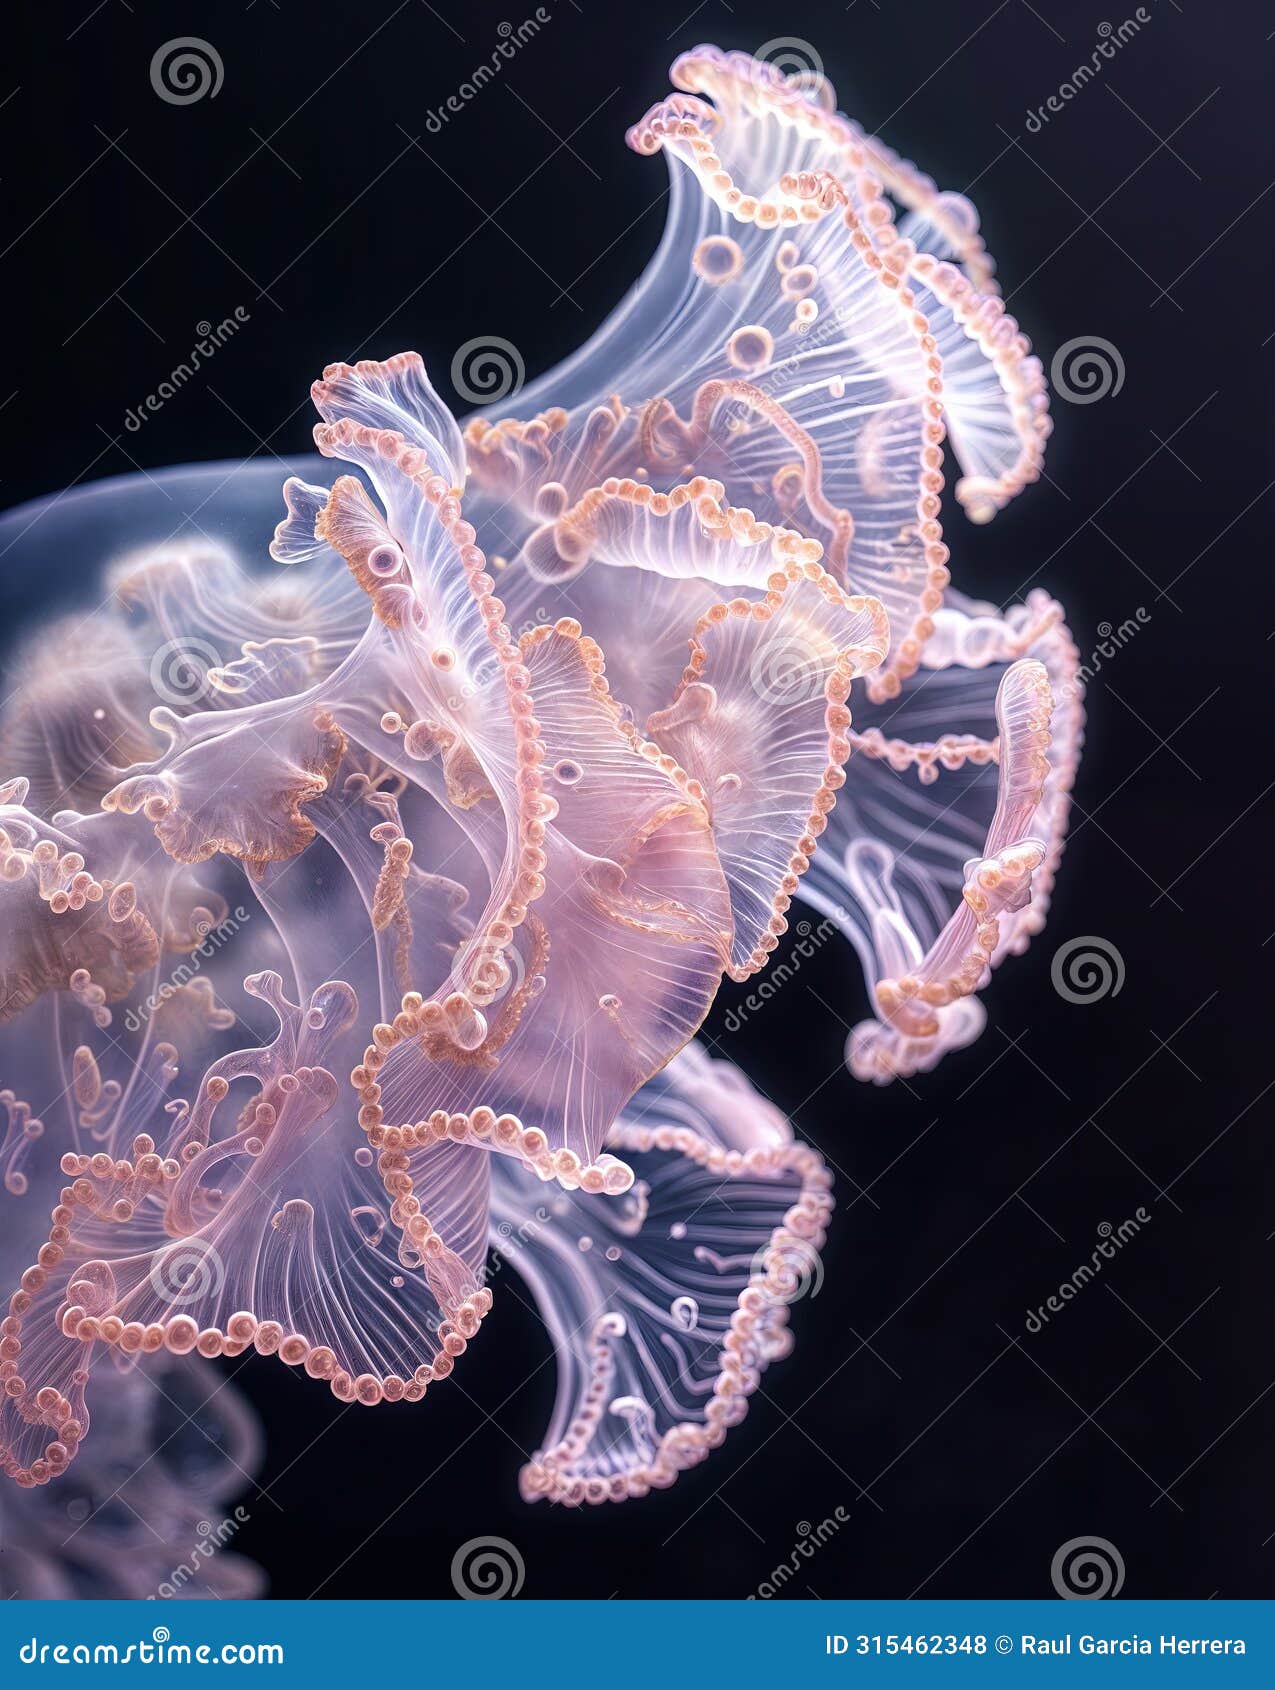 extreme macro shot of jellyfish epidermis texture